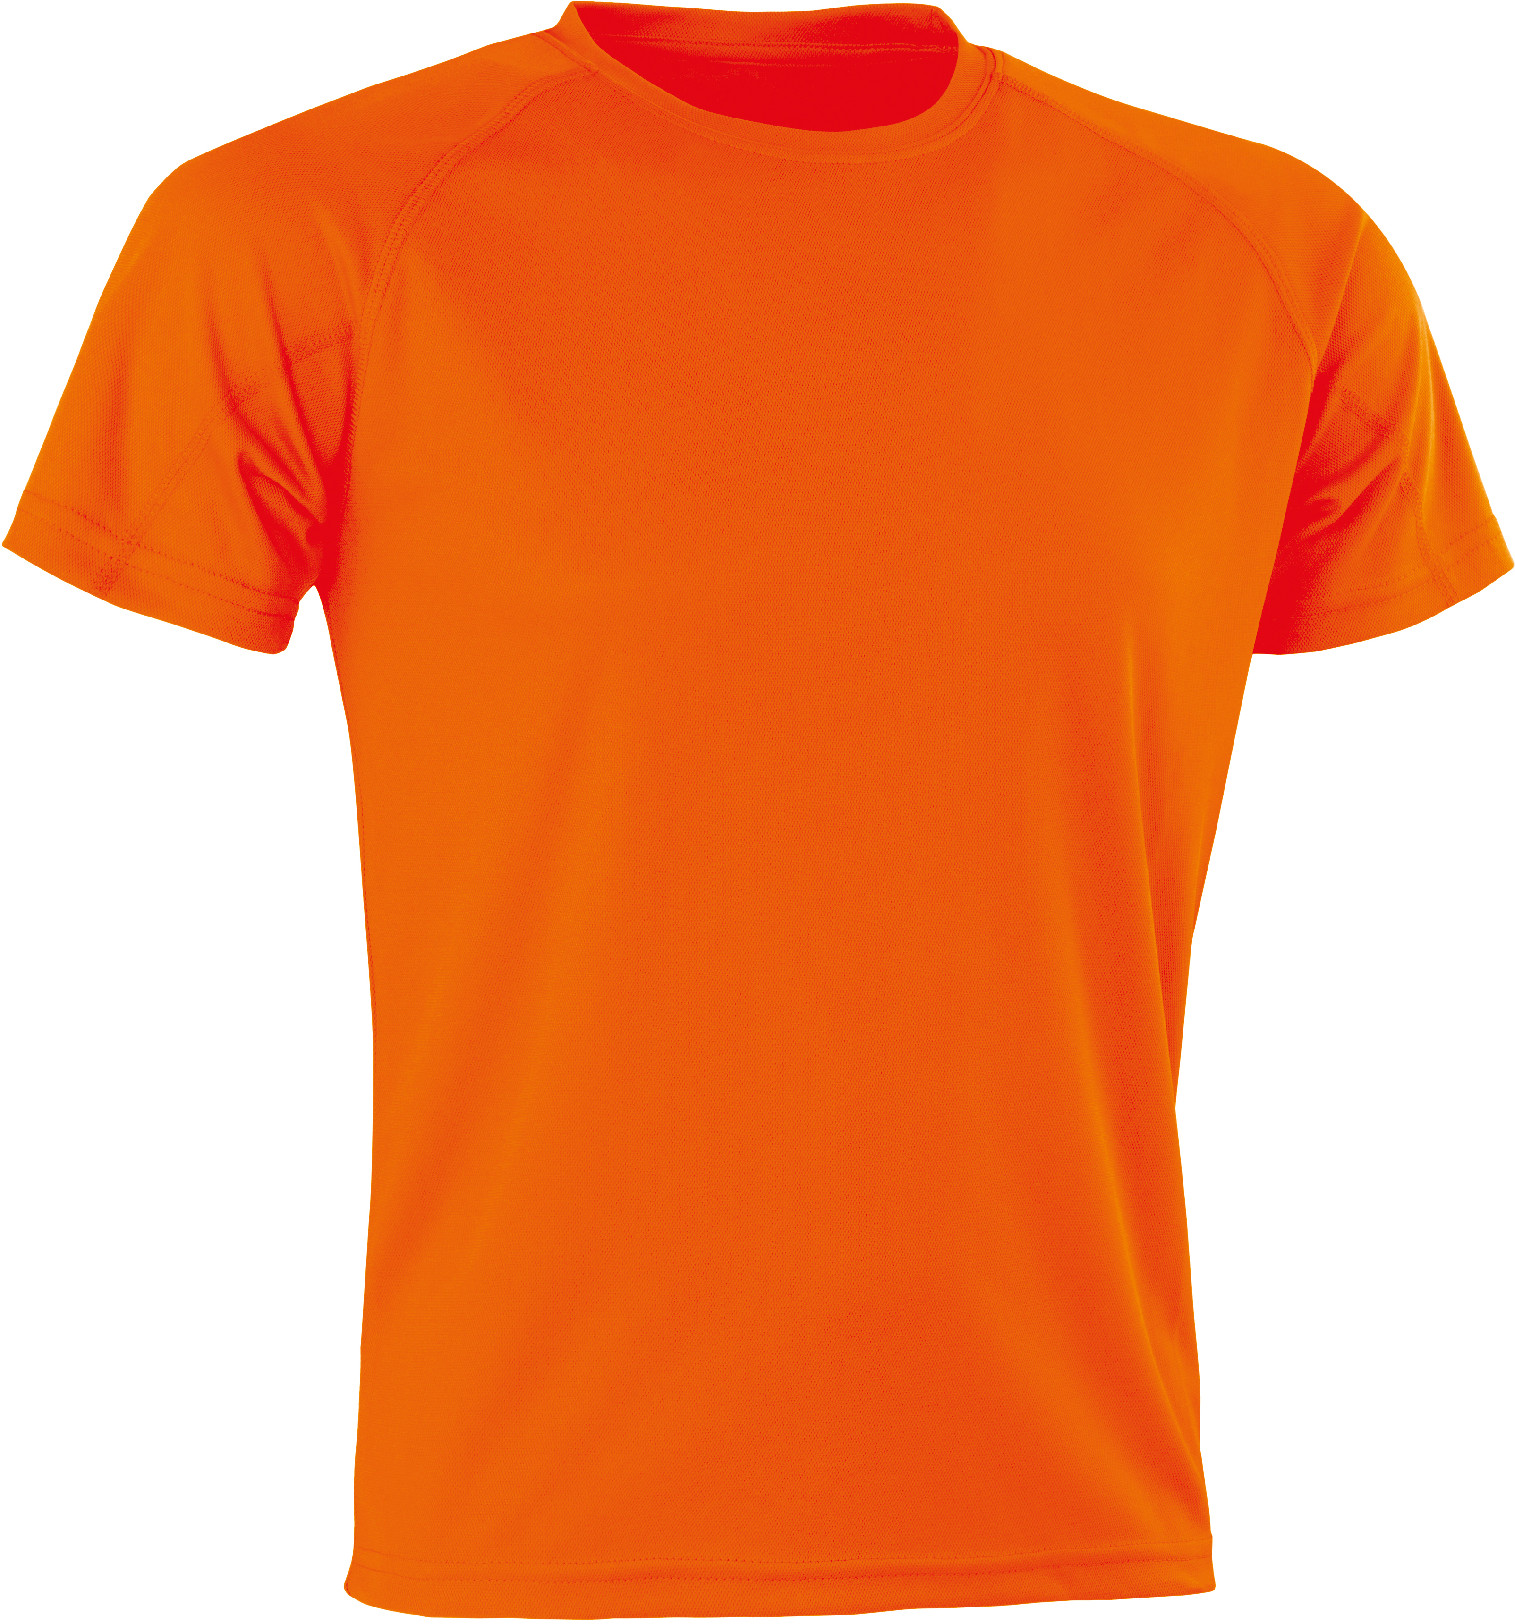 Sportovní tričko Aircool S287X Barva: neon orange, Velikost: XL